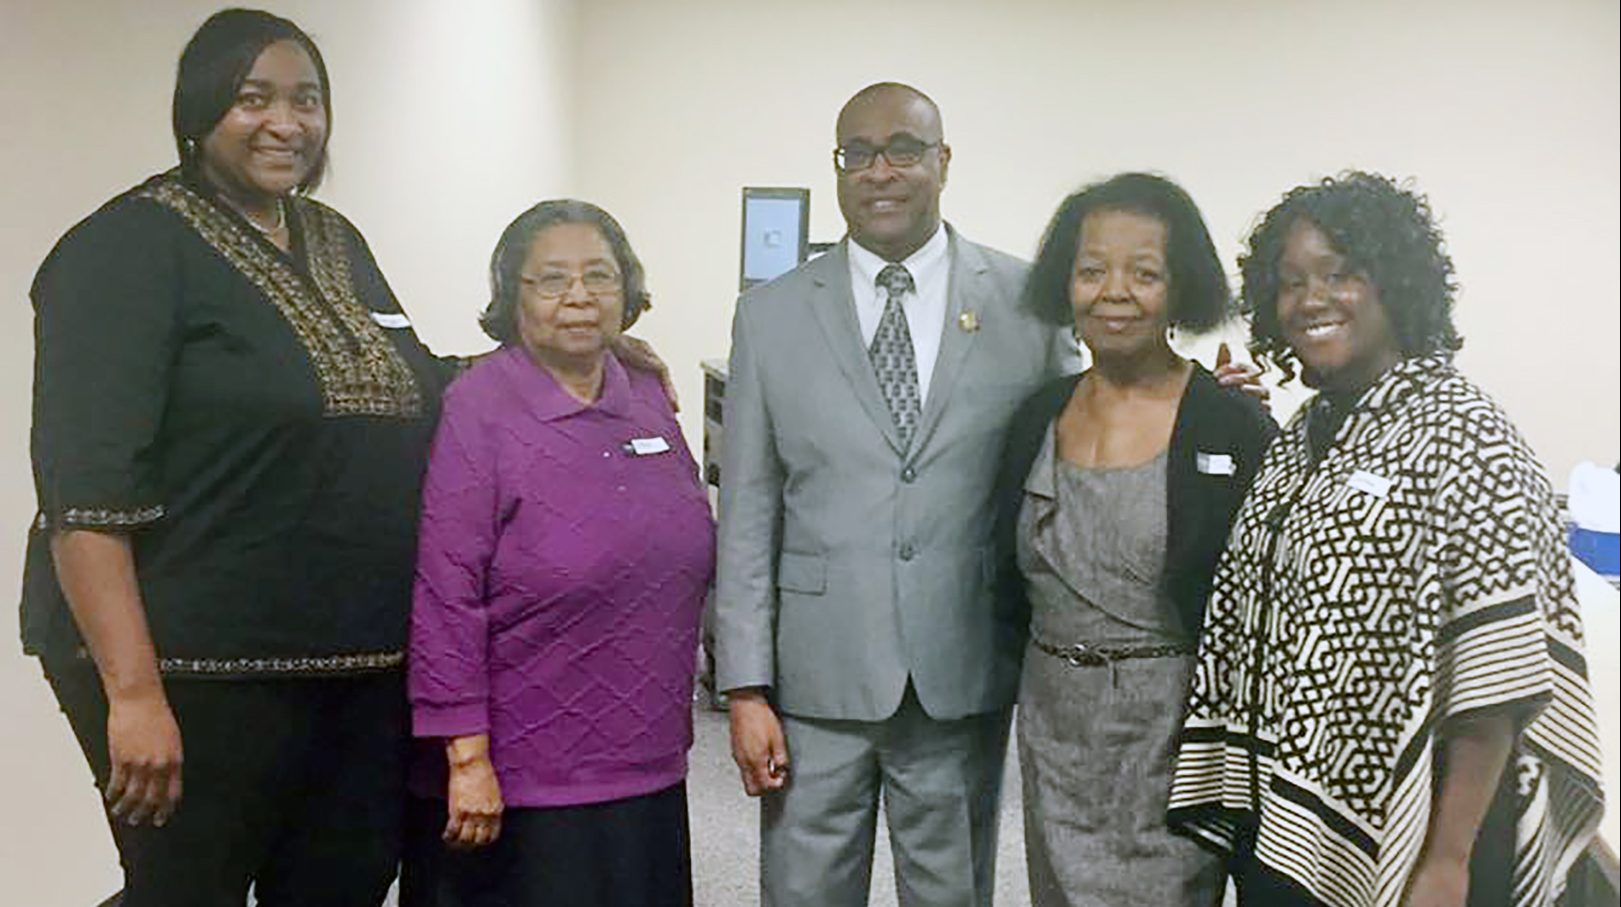 OKCU’s Black Nurses Association Shares Feb. 17 Event Invitation